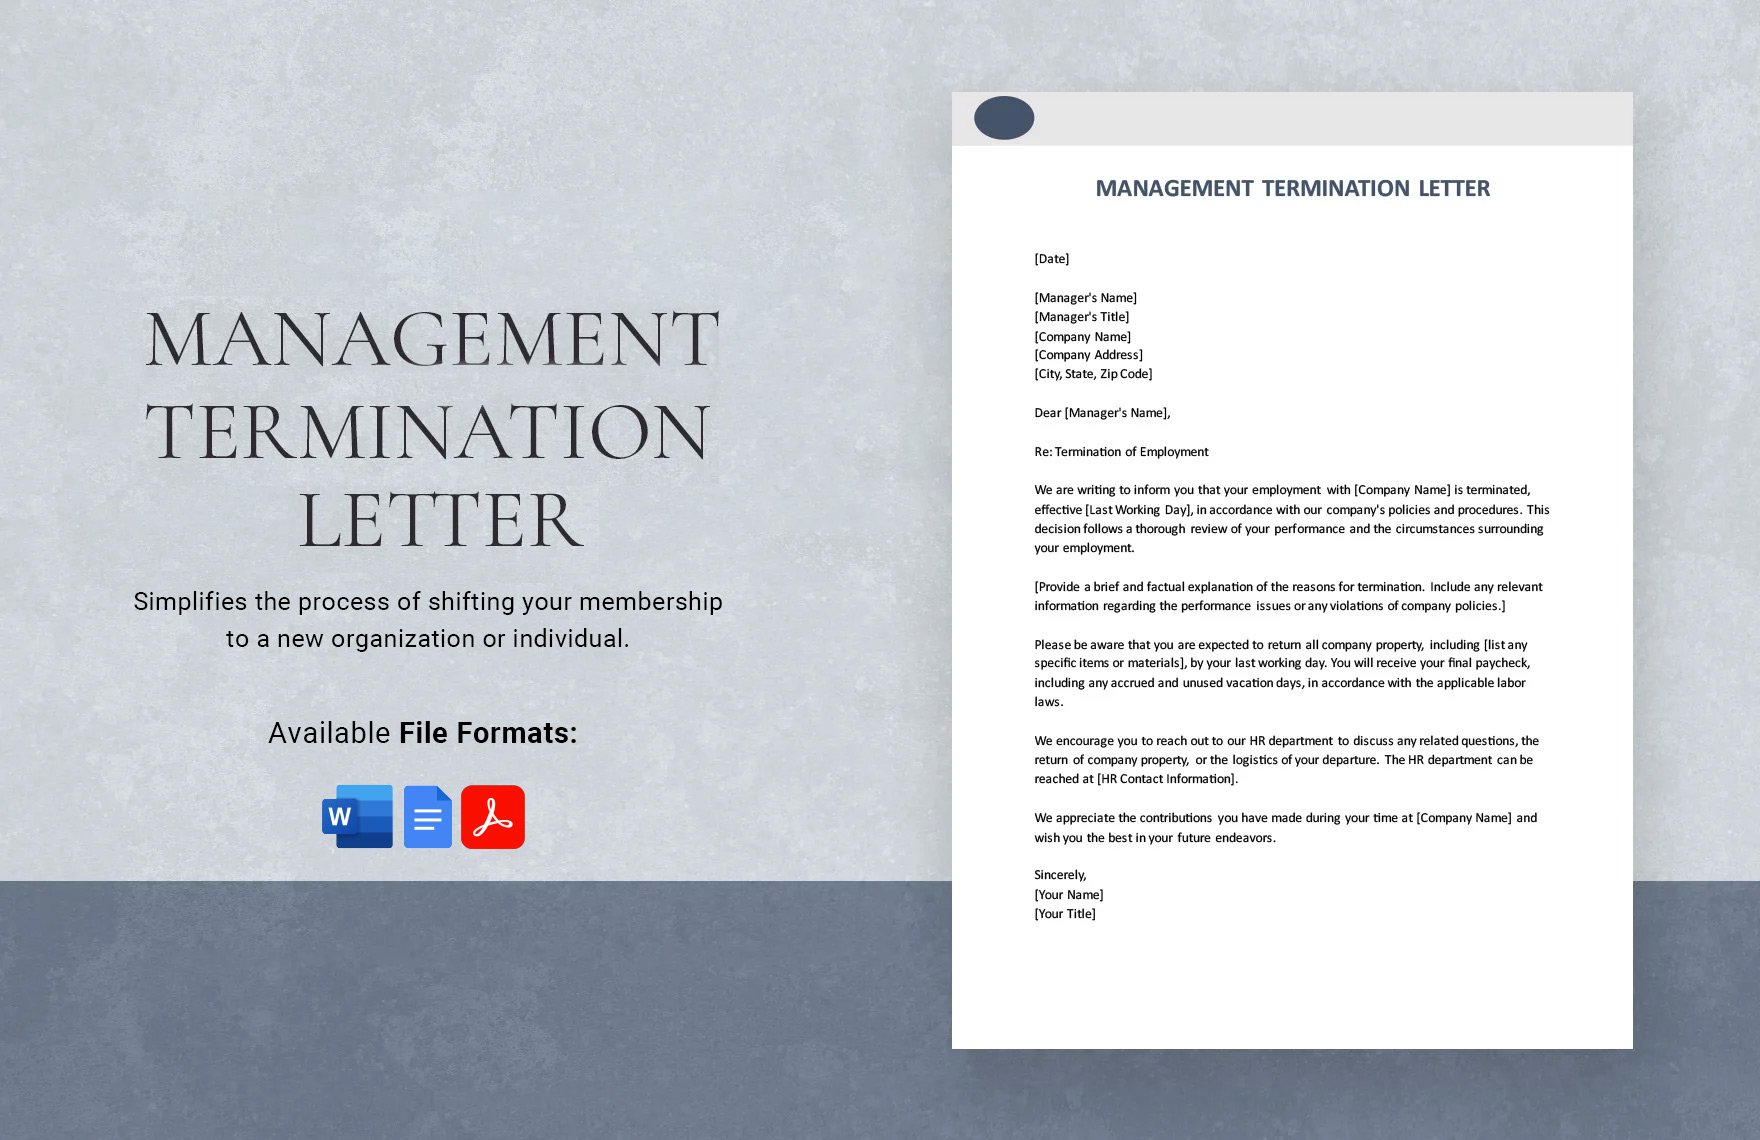 Management Termination Letter in Word, Google Docs, PDF